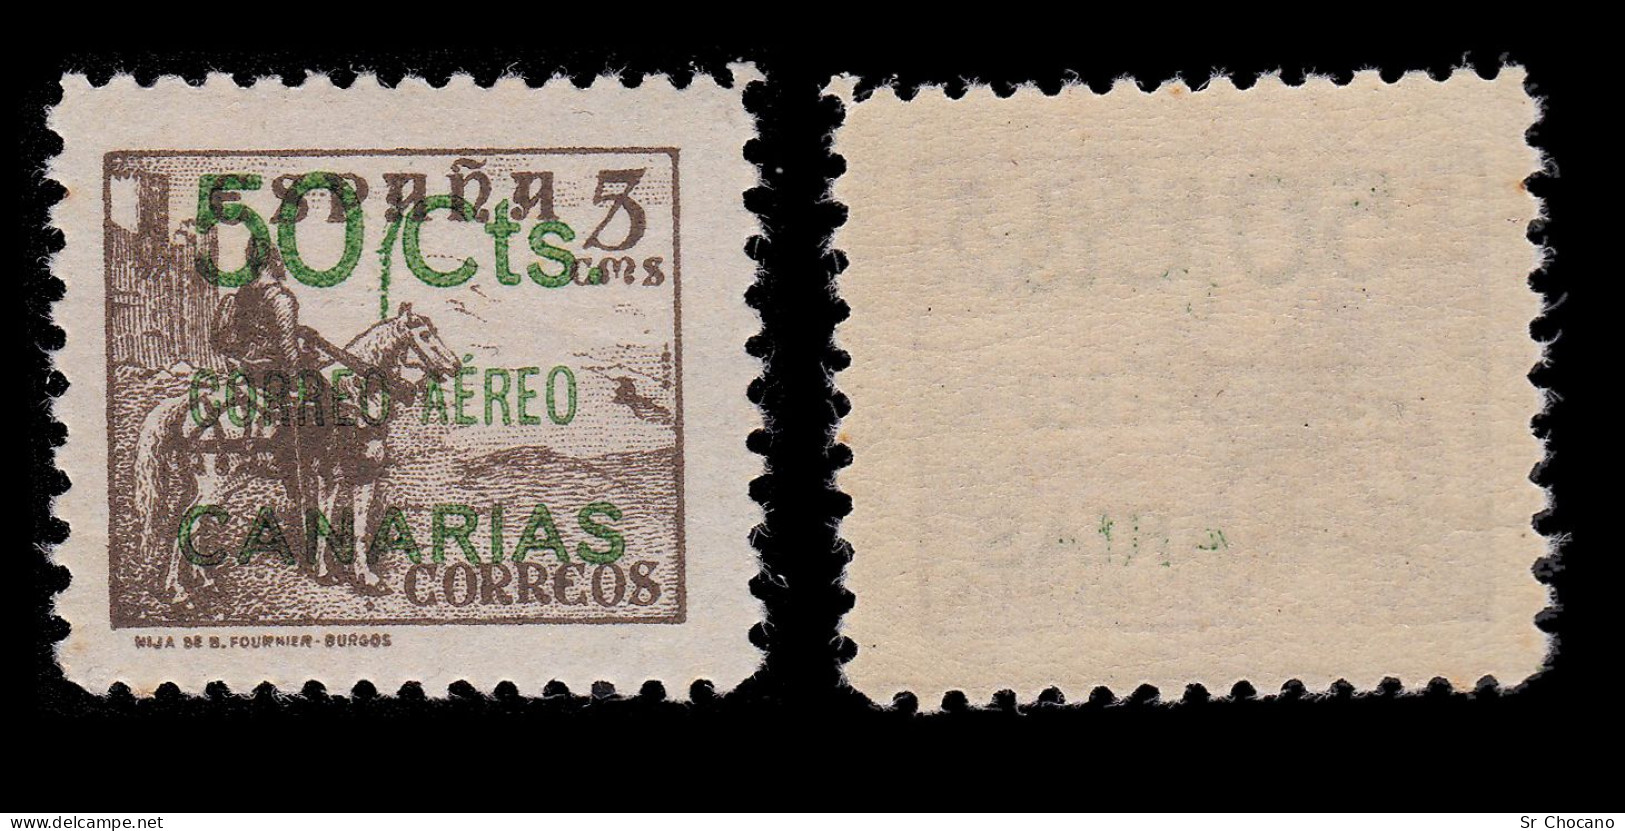 España.Guerra Civil. Canarias.LOCALES.1937.50c S 5c.MNH Edifil.34. CENTRADO - Emissions Nationalistes